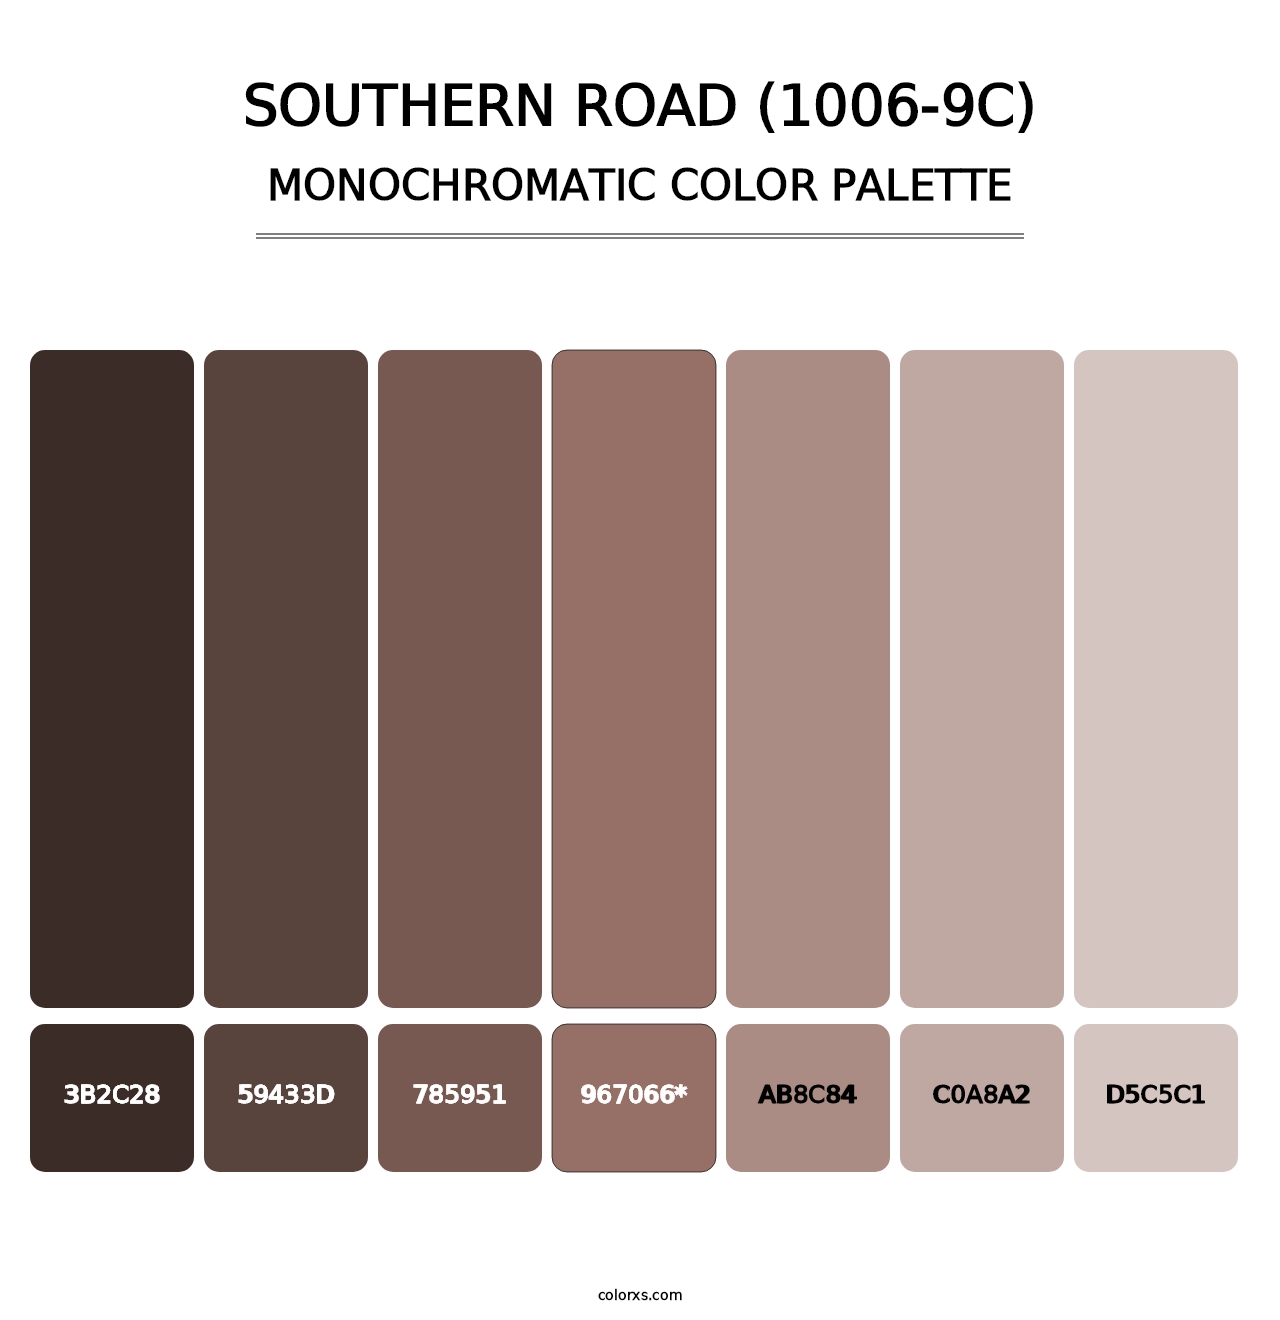 Southern Road (1006-9C) - Monochromatic Color Palette